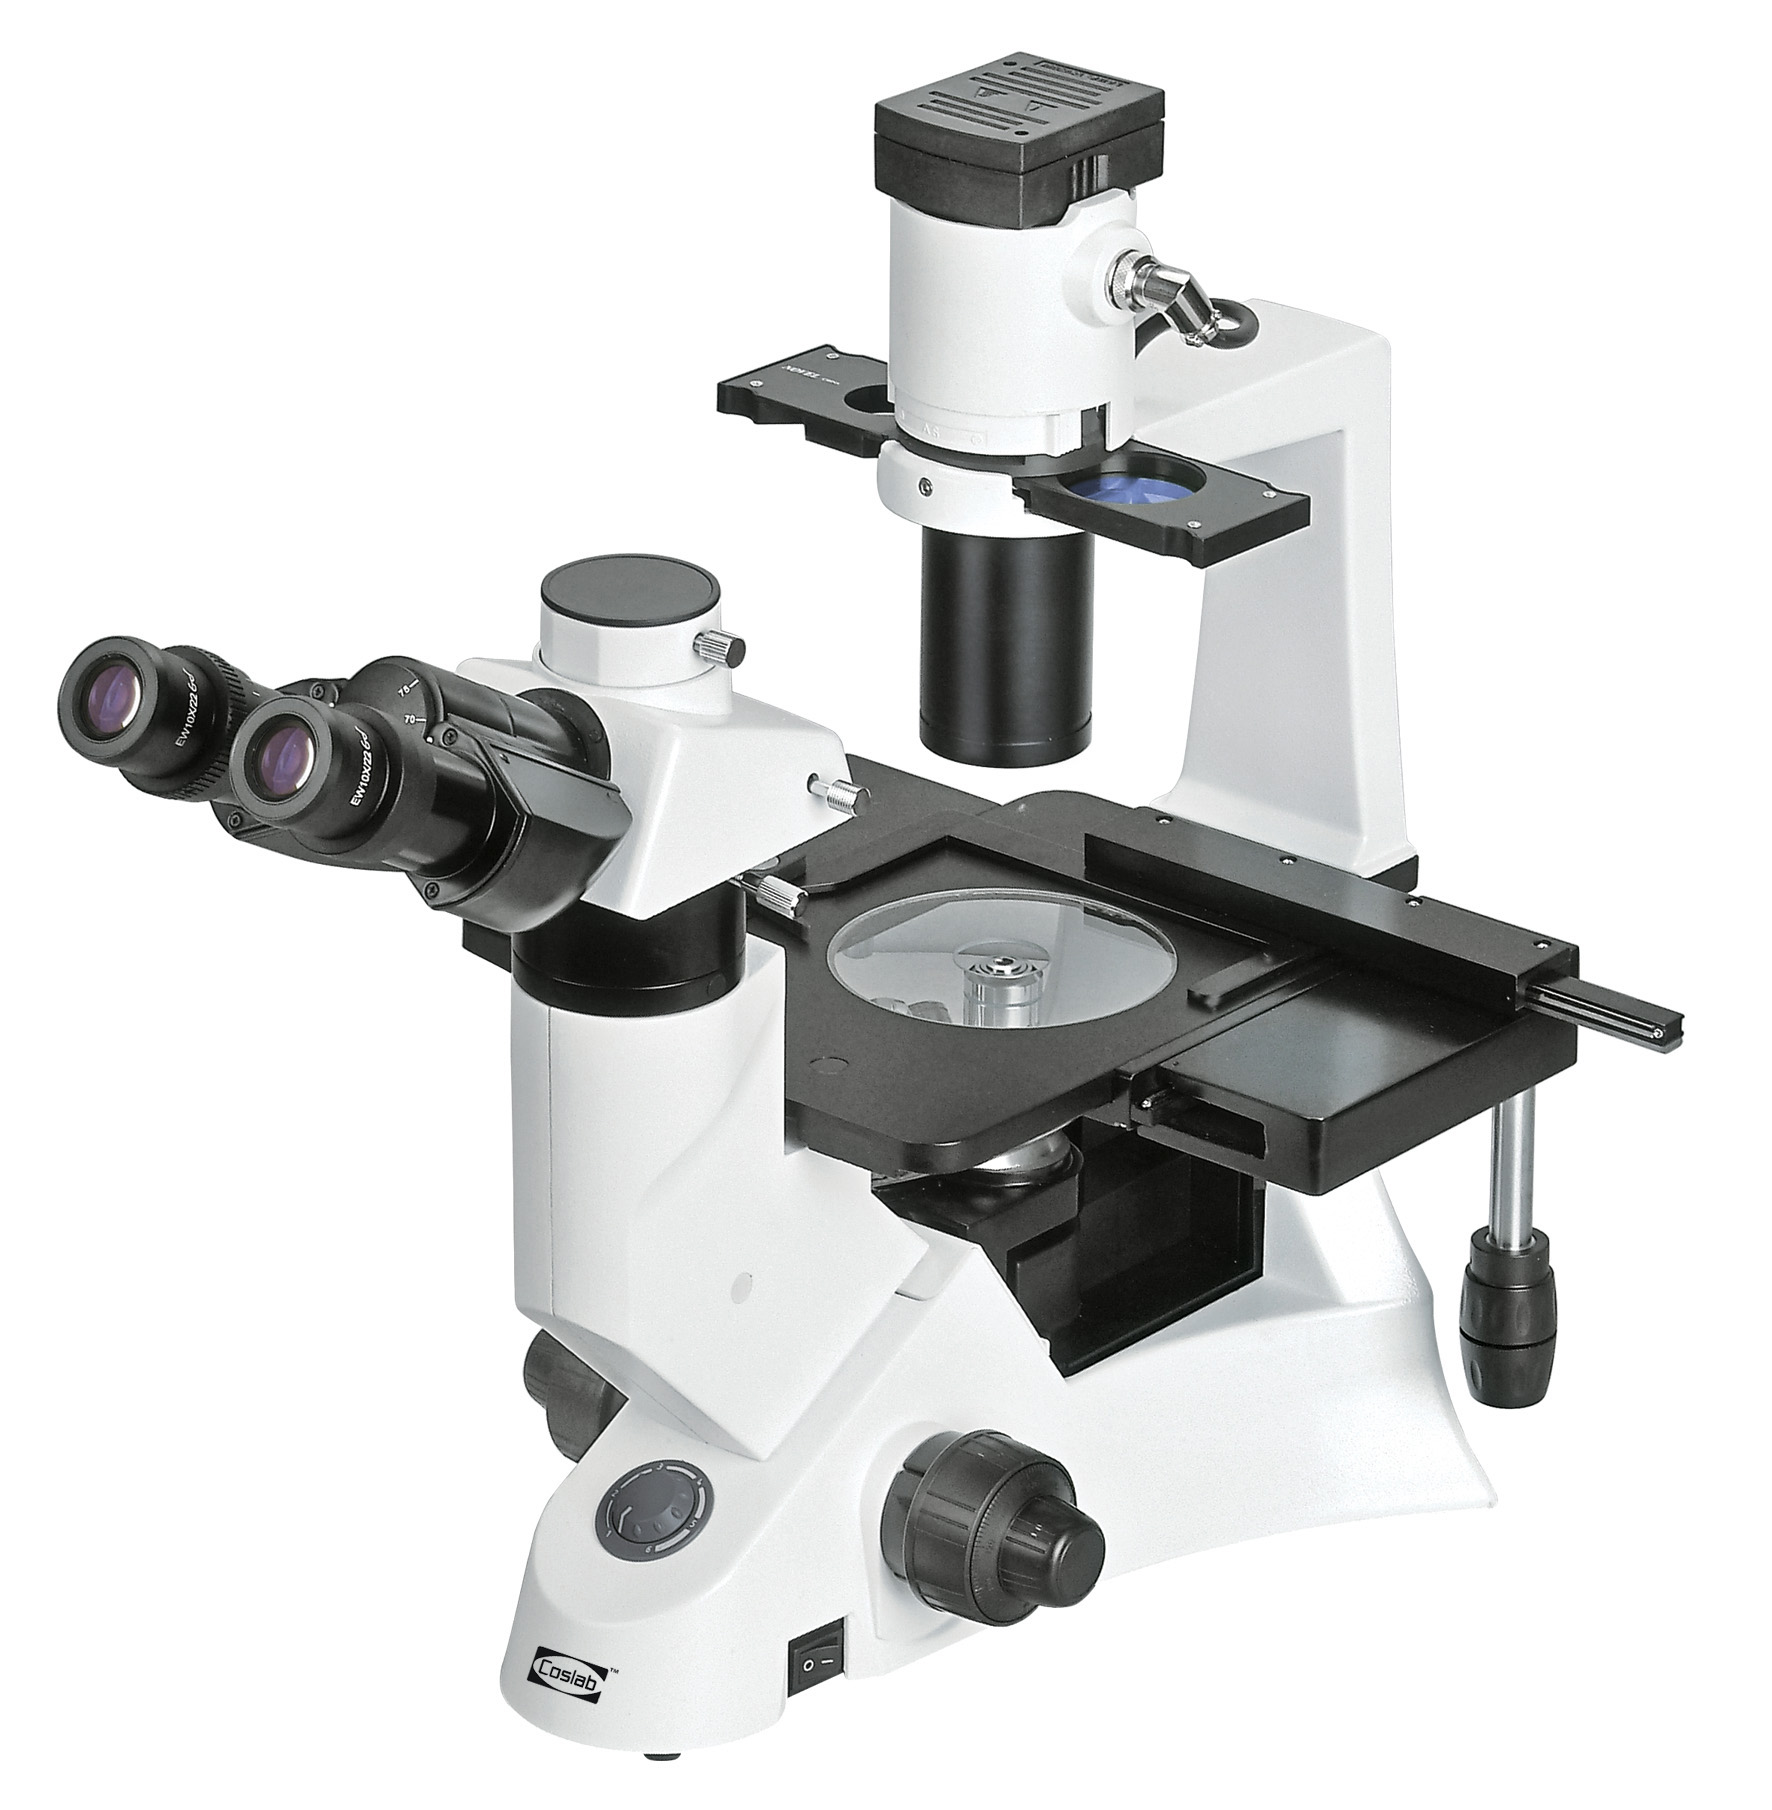 CIB-100 Inverted Biological Microscope